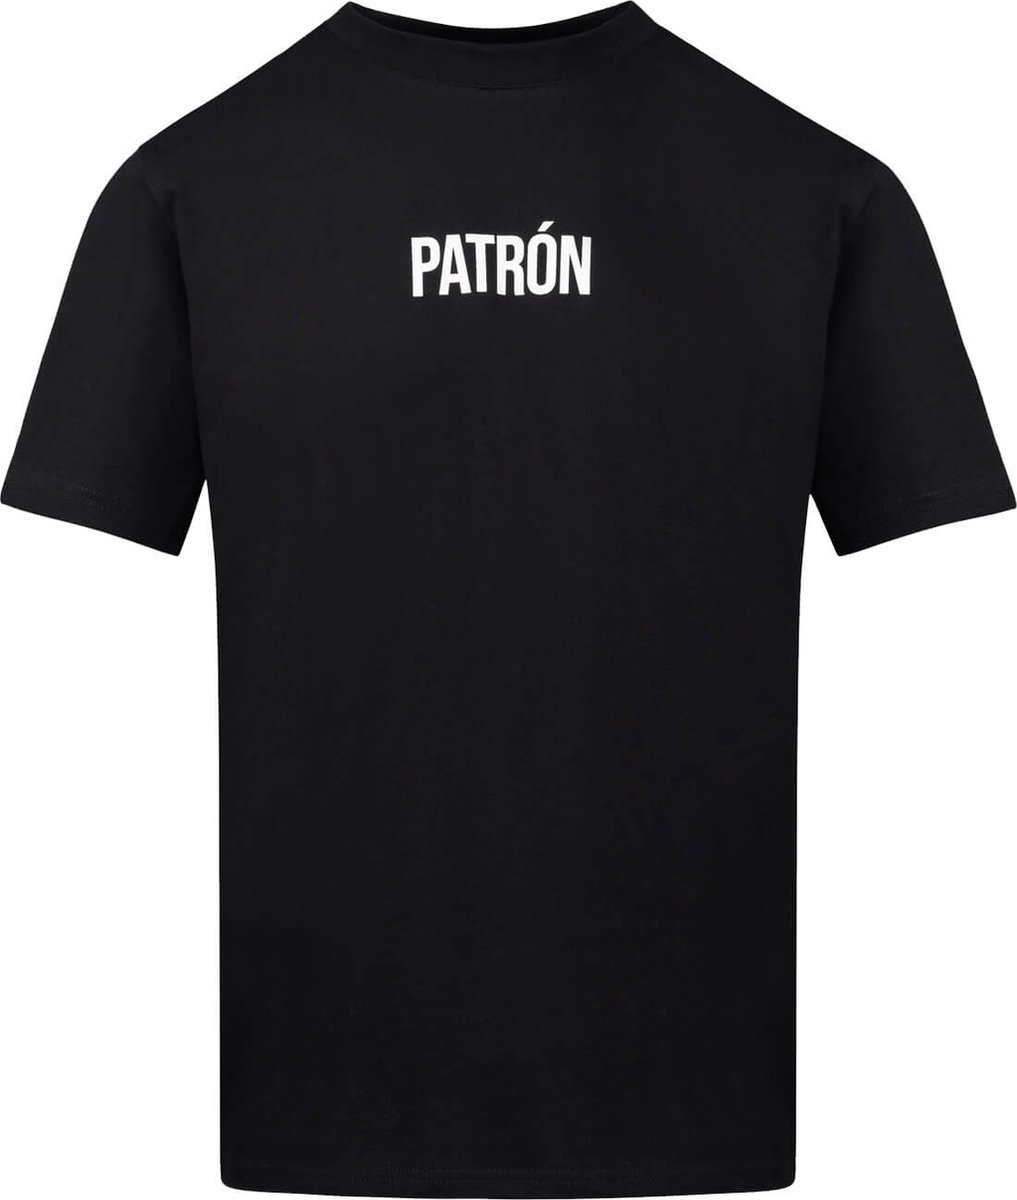 Patrón Wear - T-shirt - Oversized Brand T-shirt Black/White - Maat XS